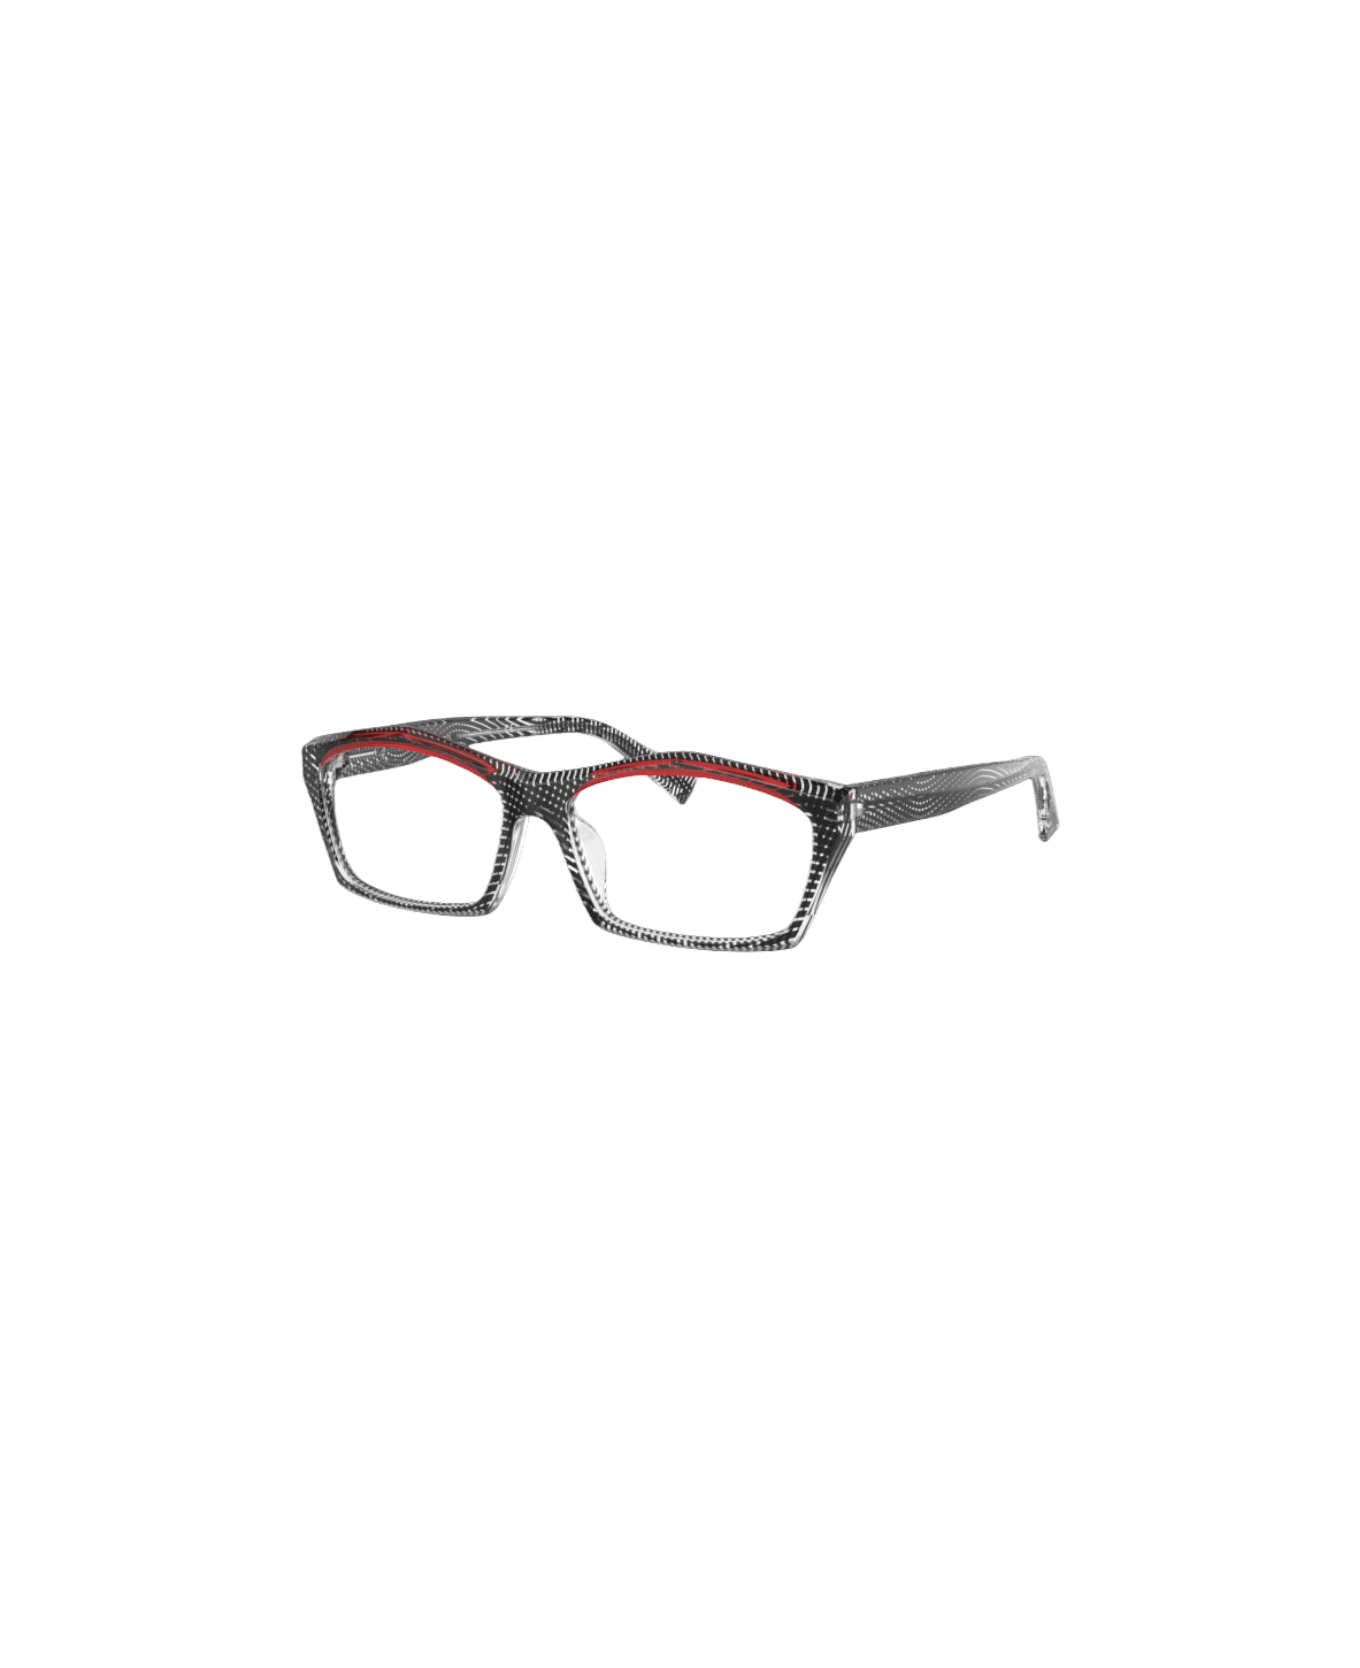 Alain Mikli Erwan - 3127 - Crystal Black/ Red Glasses